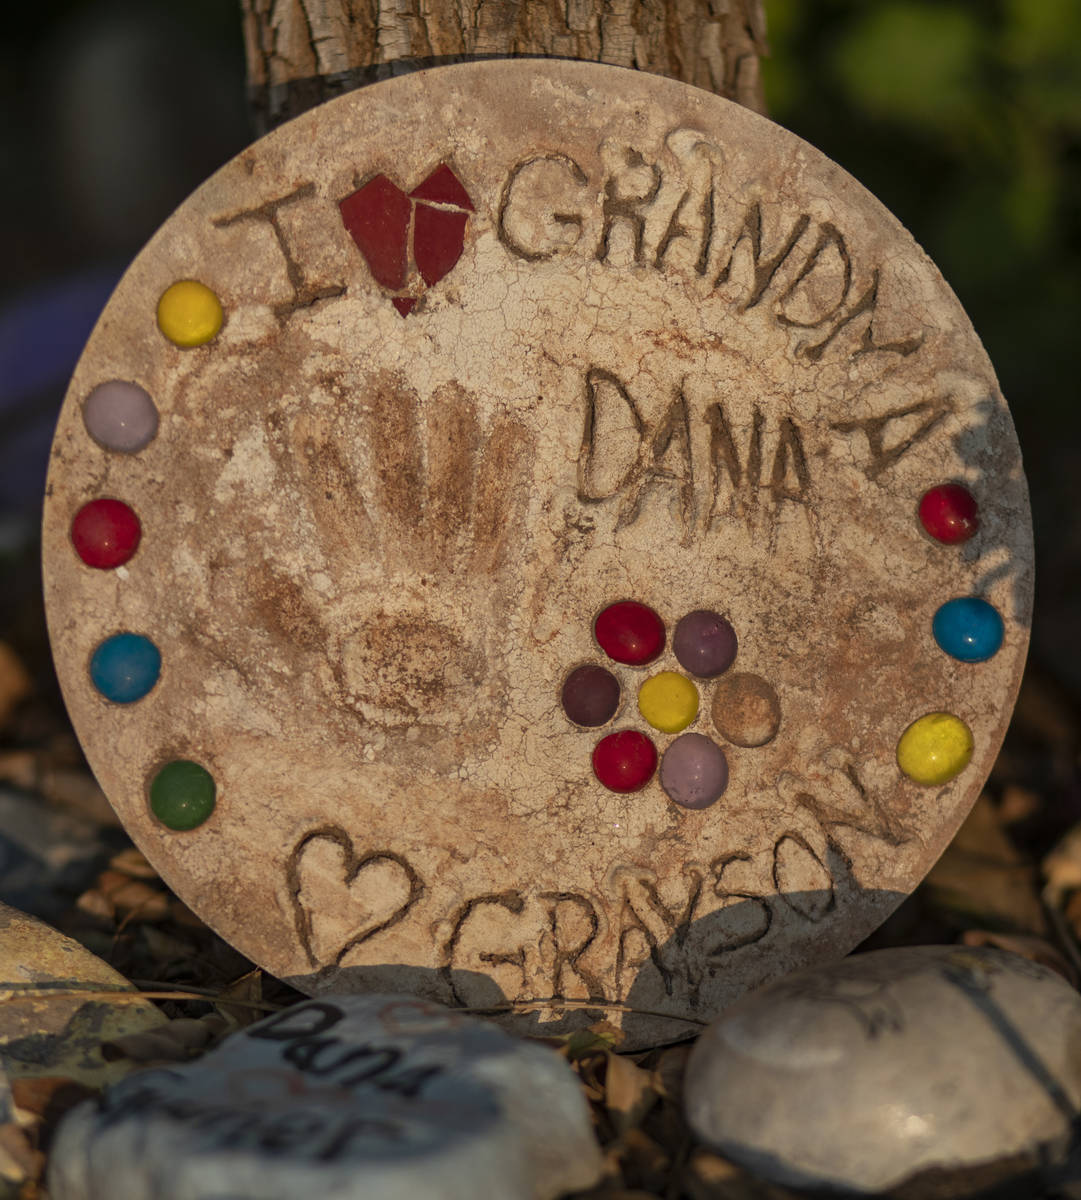 Mementos adorn memorials for Route 91 Harvest festival shooting victims. (Elizabeth Page Brumle ...